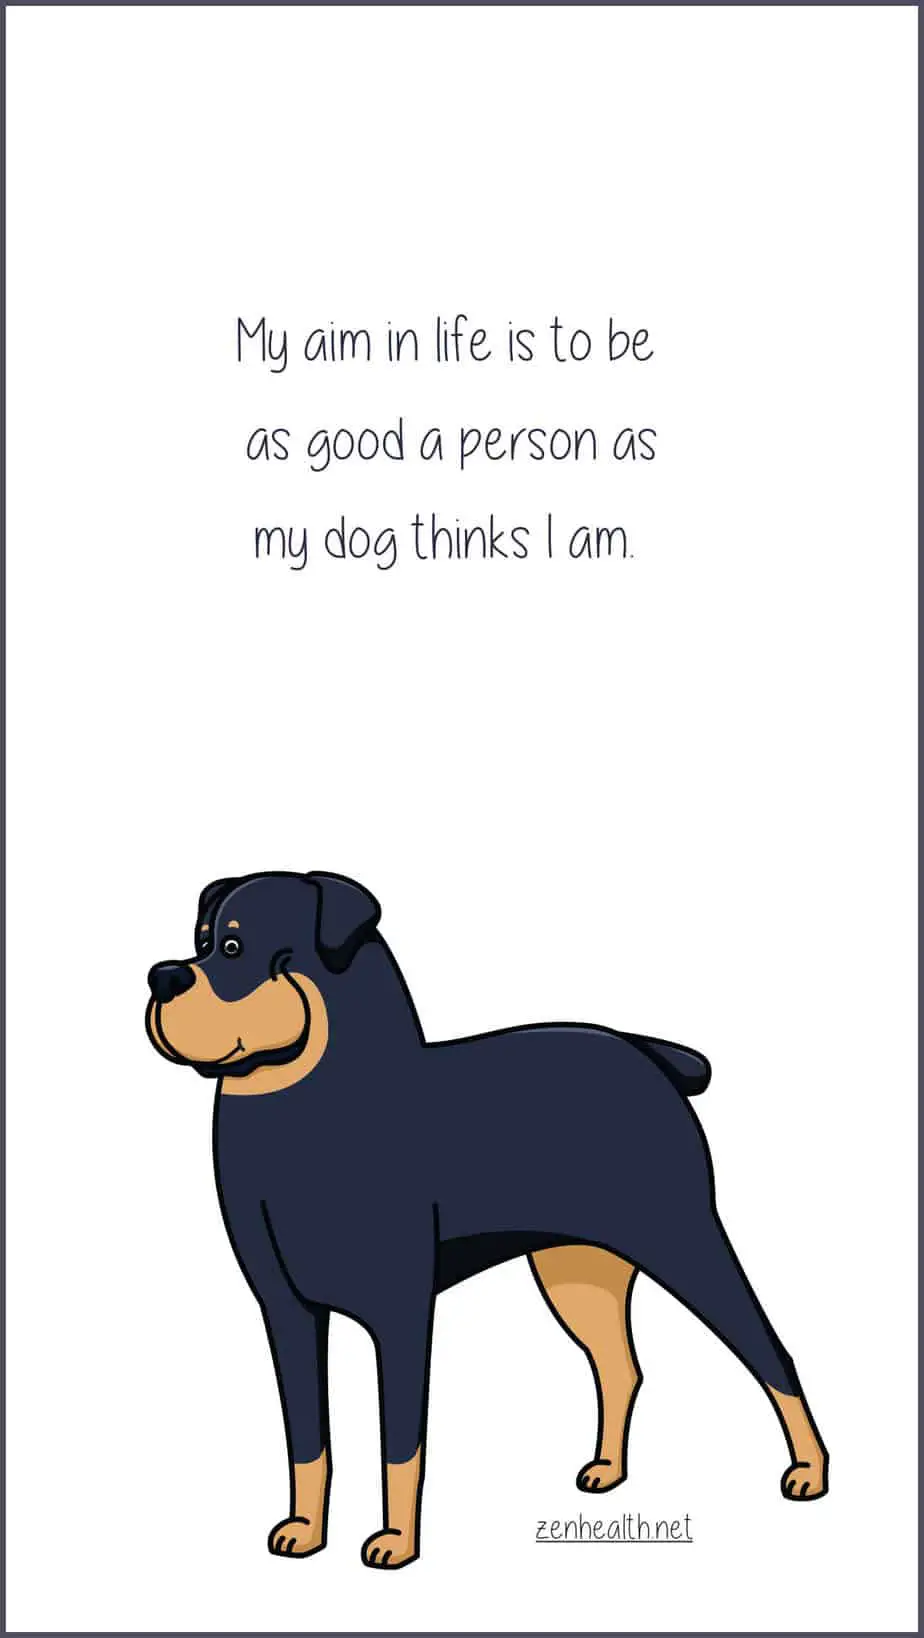 My aim in life is to be as good a person as my dog thinks I am.